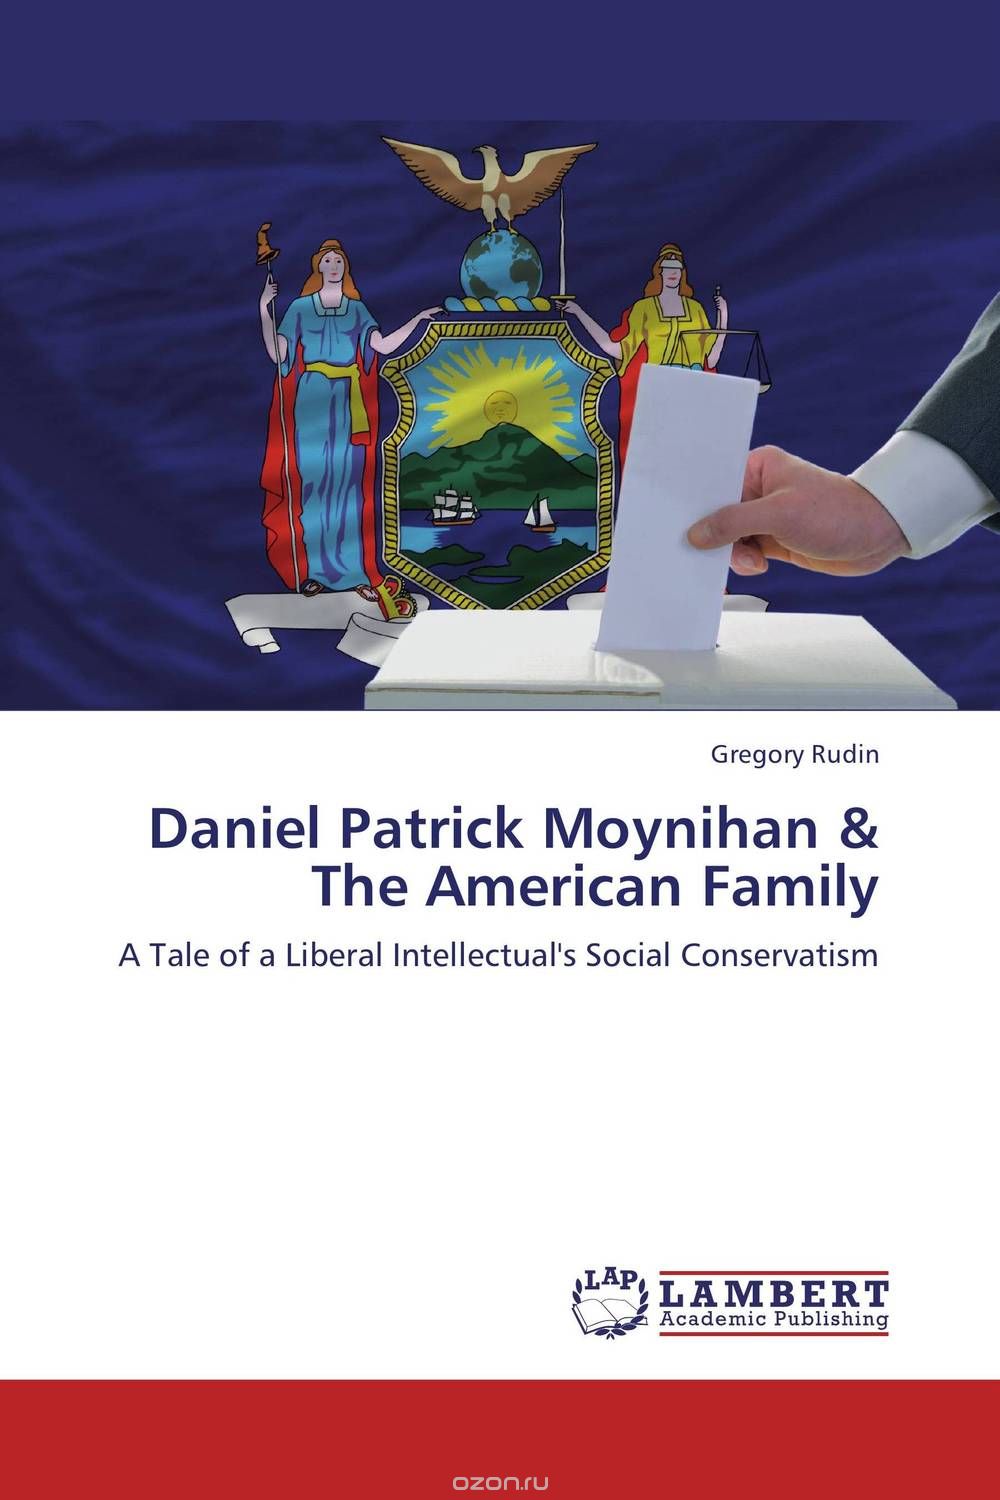 Скачать книгу "Daniel Patrick Moynihan & The American Family"